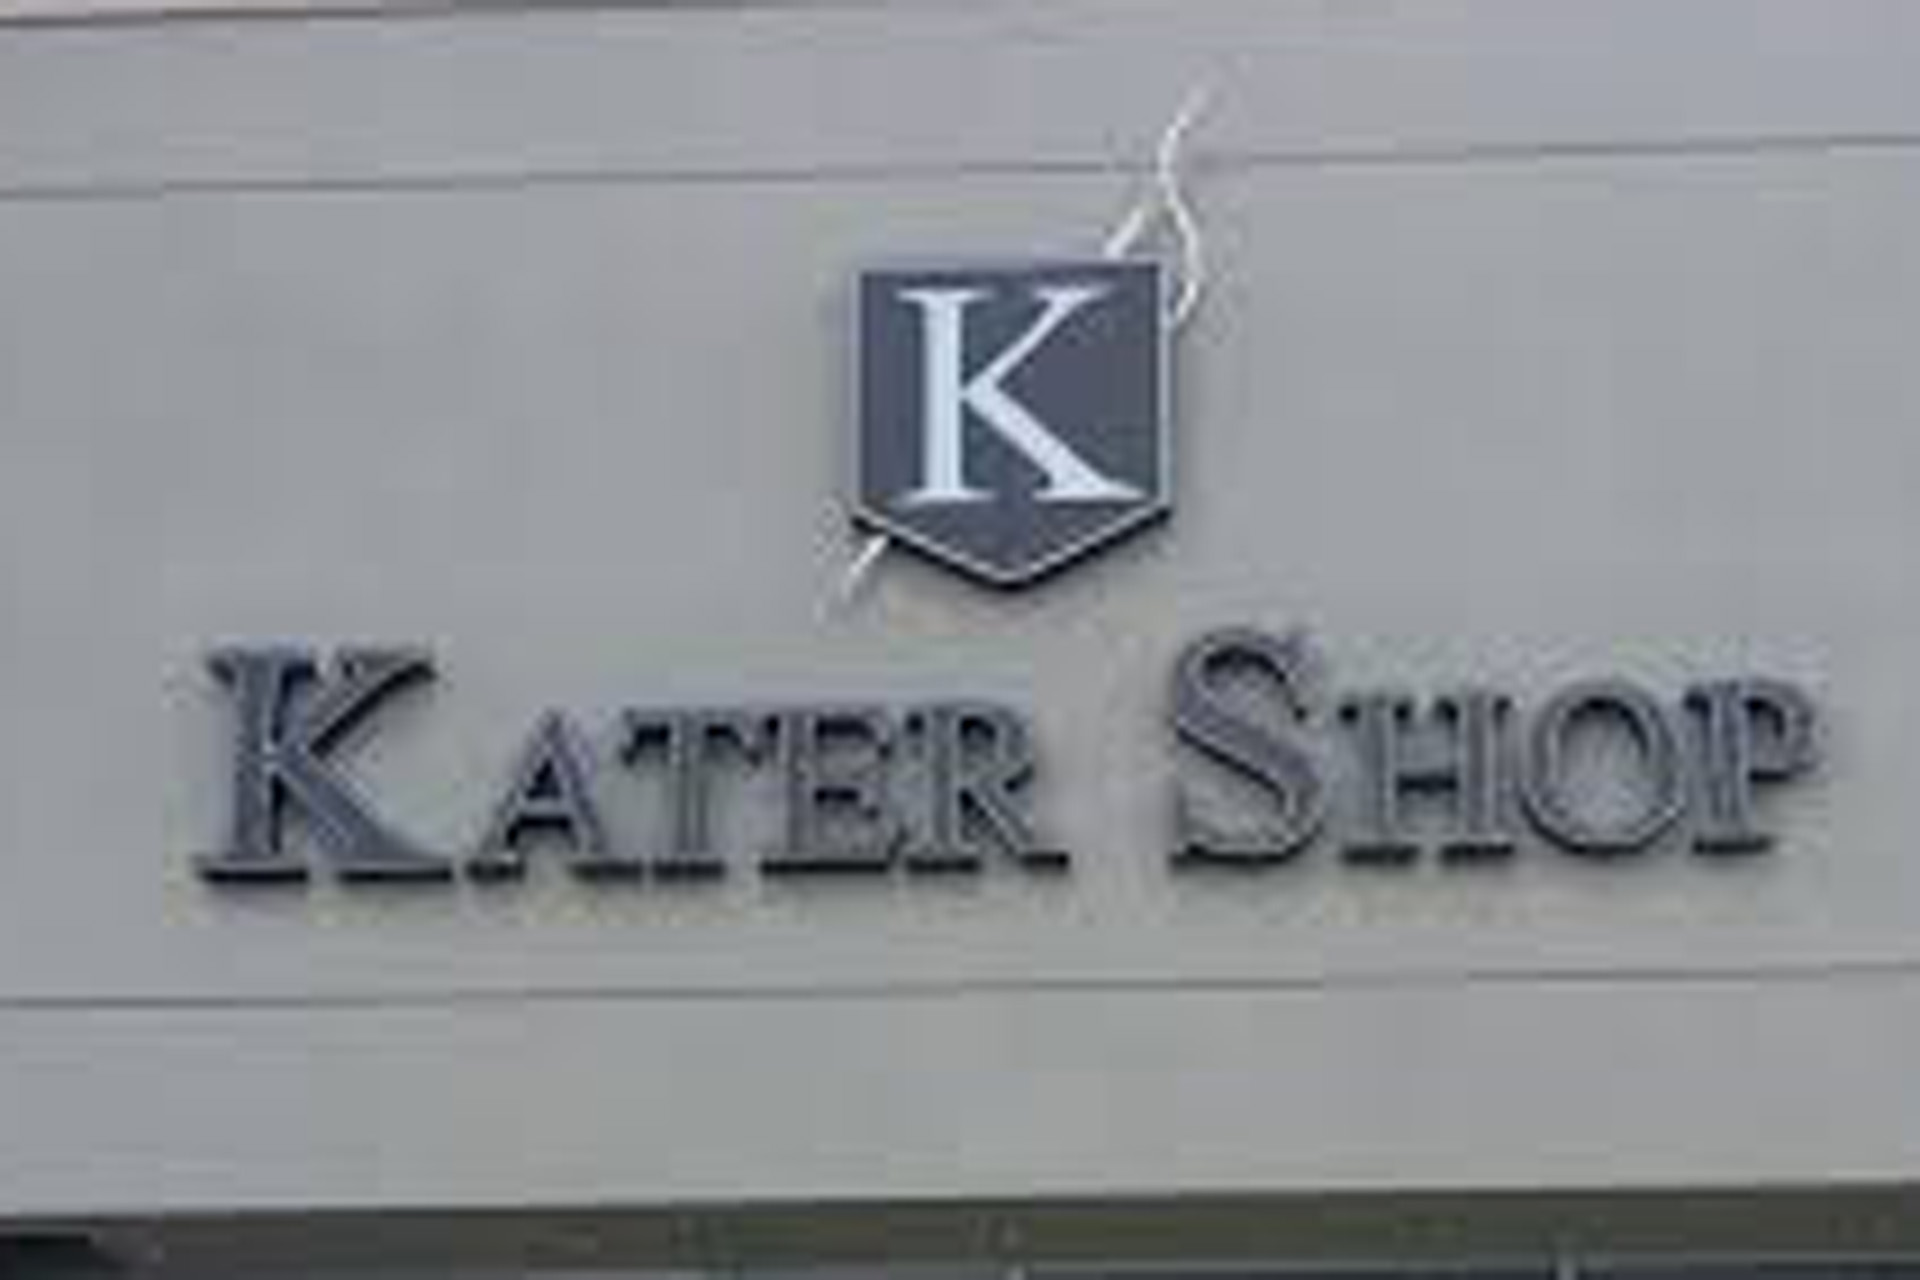 Kater Shop